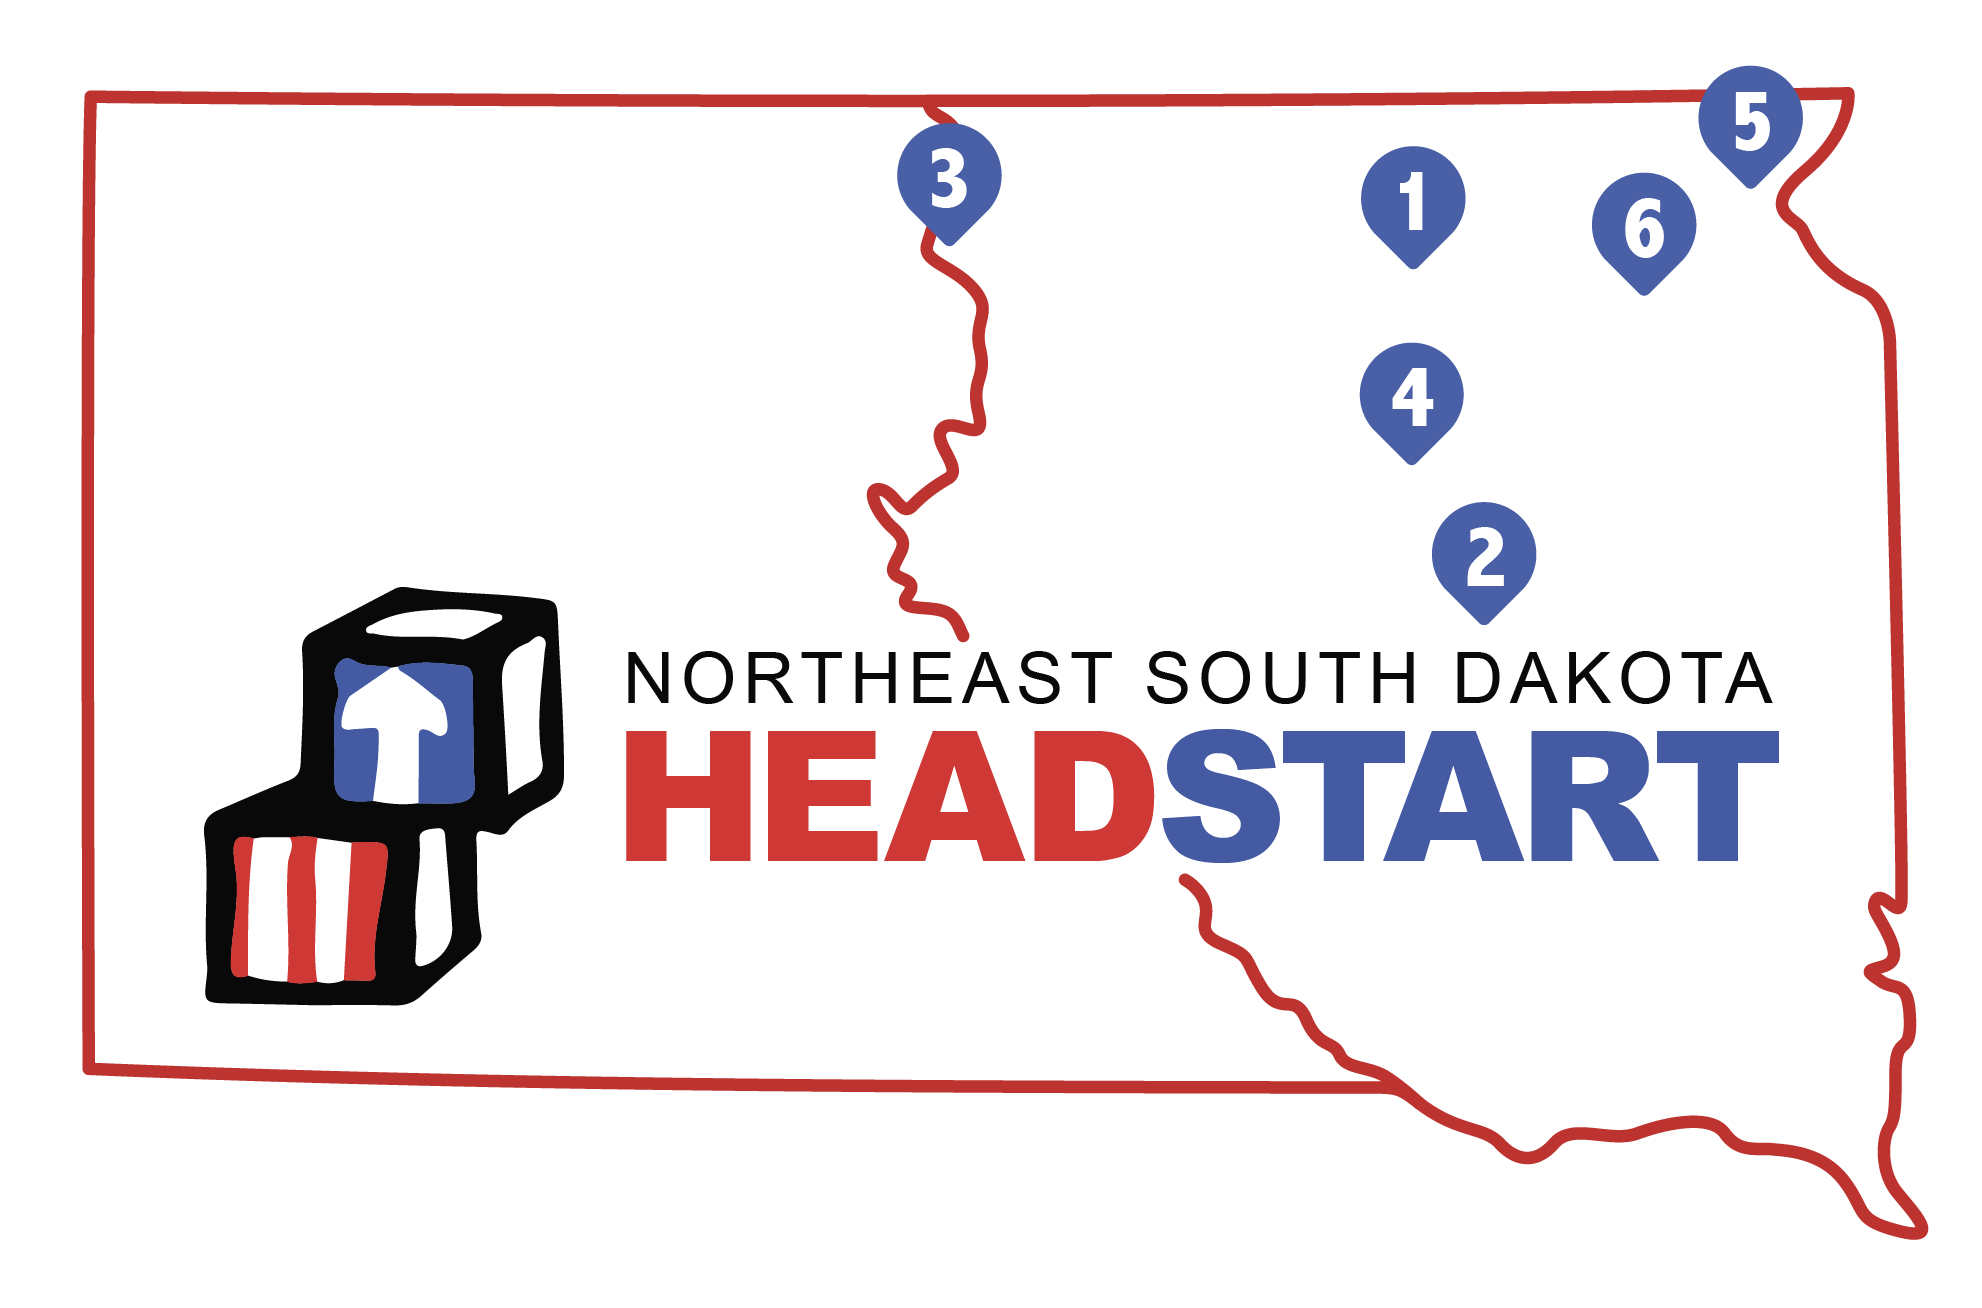 Northeast South Dakota Headstart locations